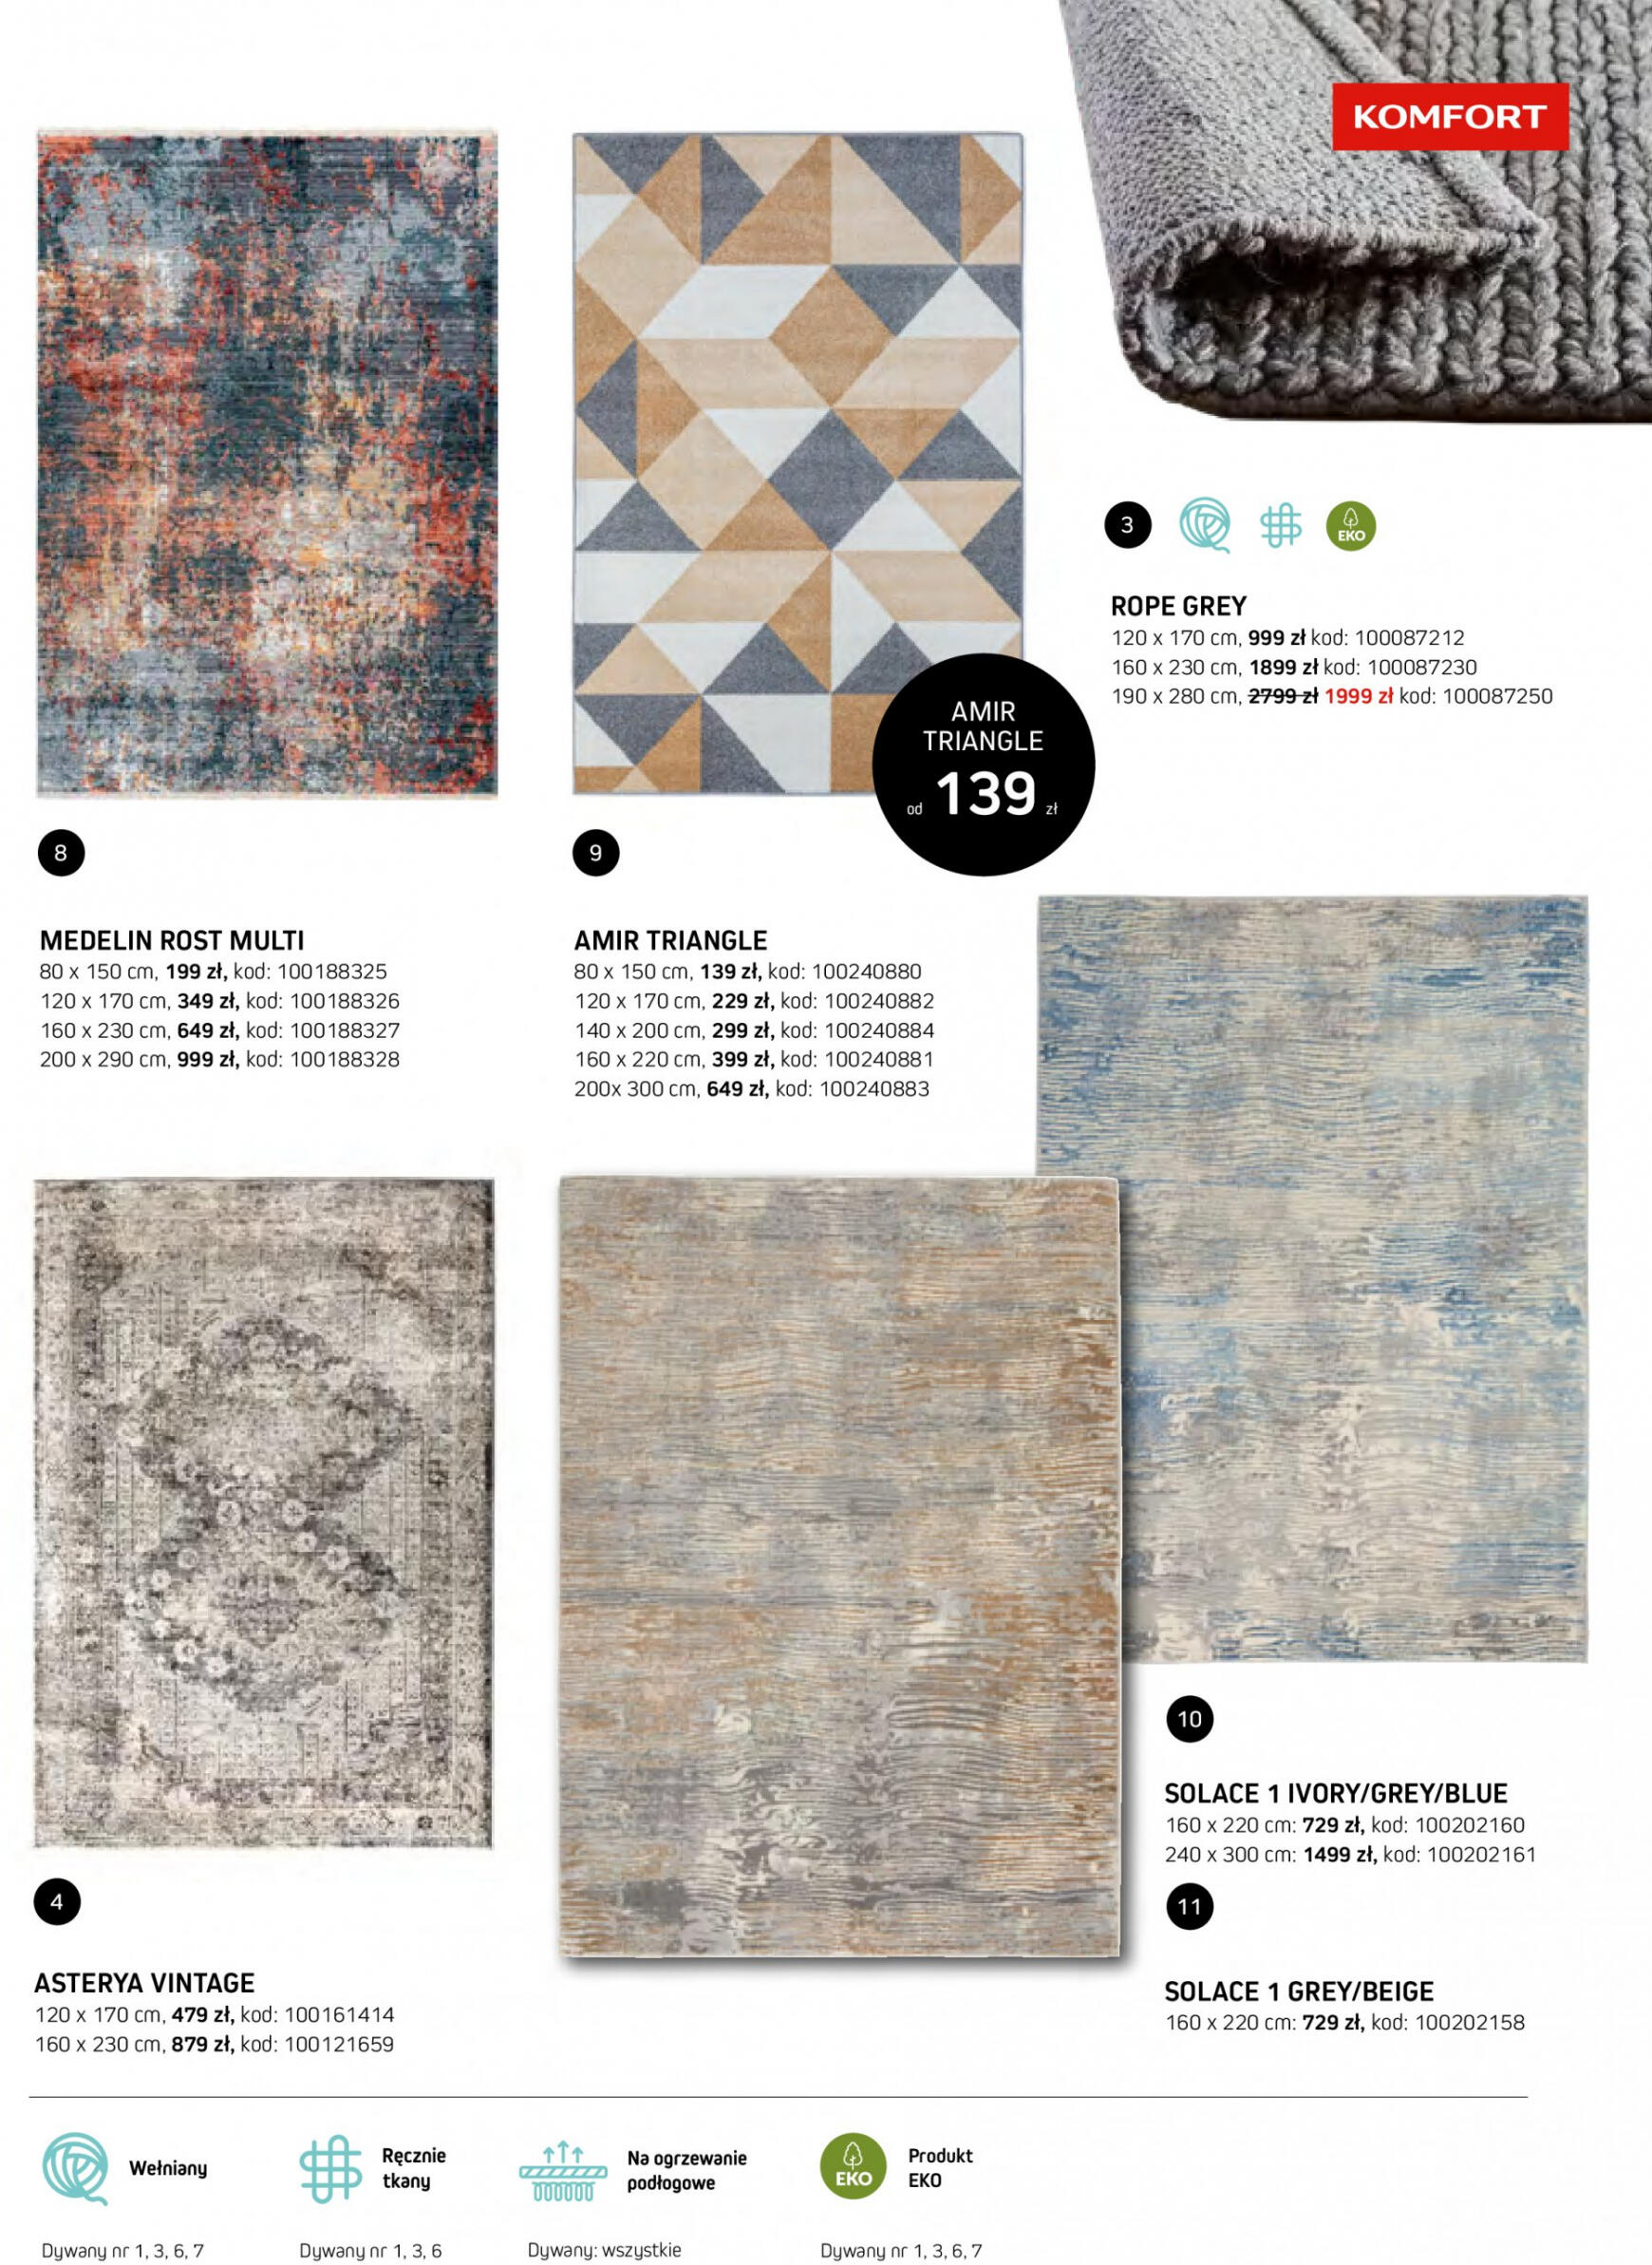 komfort - Komfort - Katalog dywany - page: 31